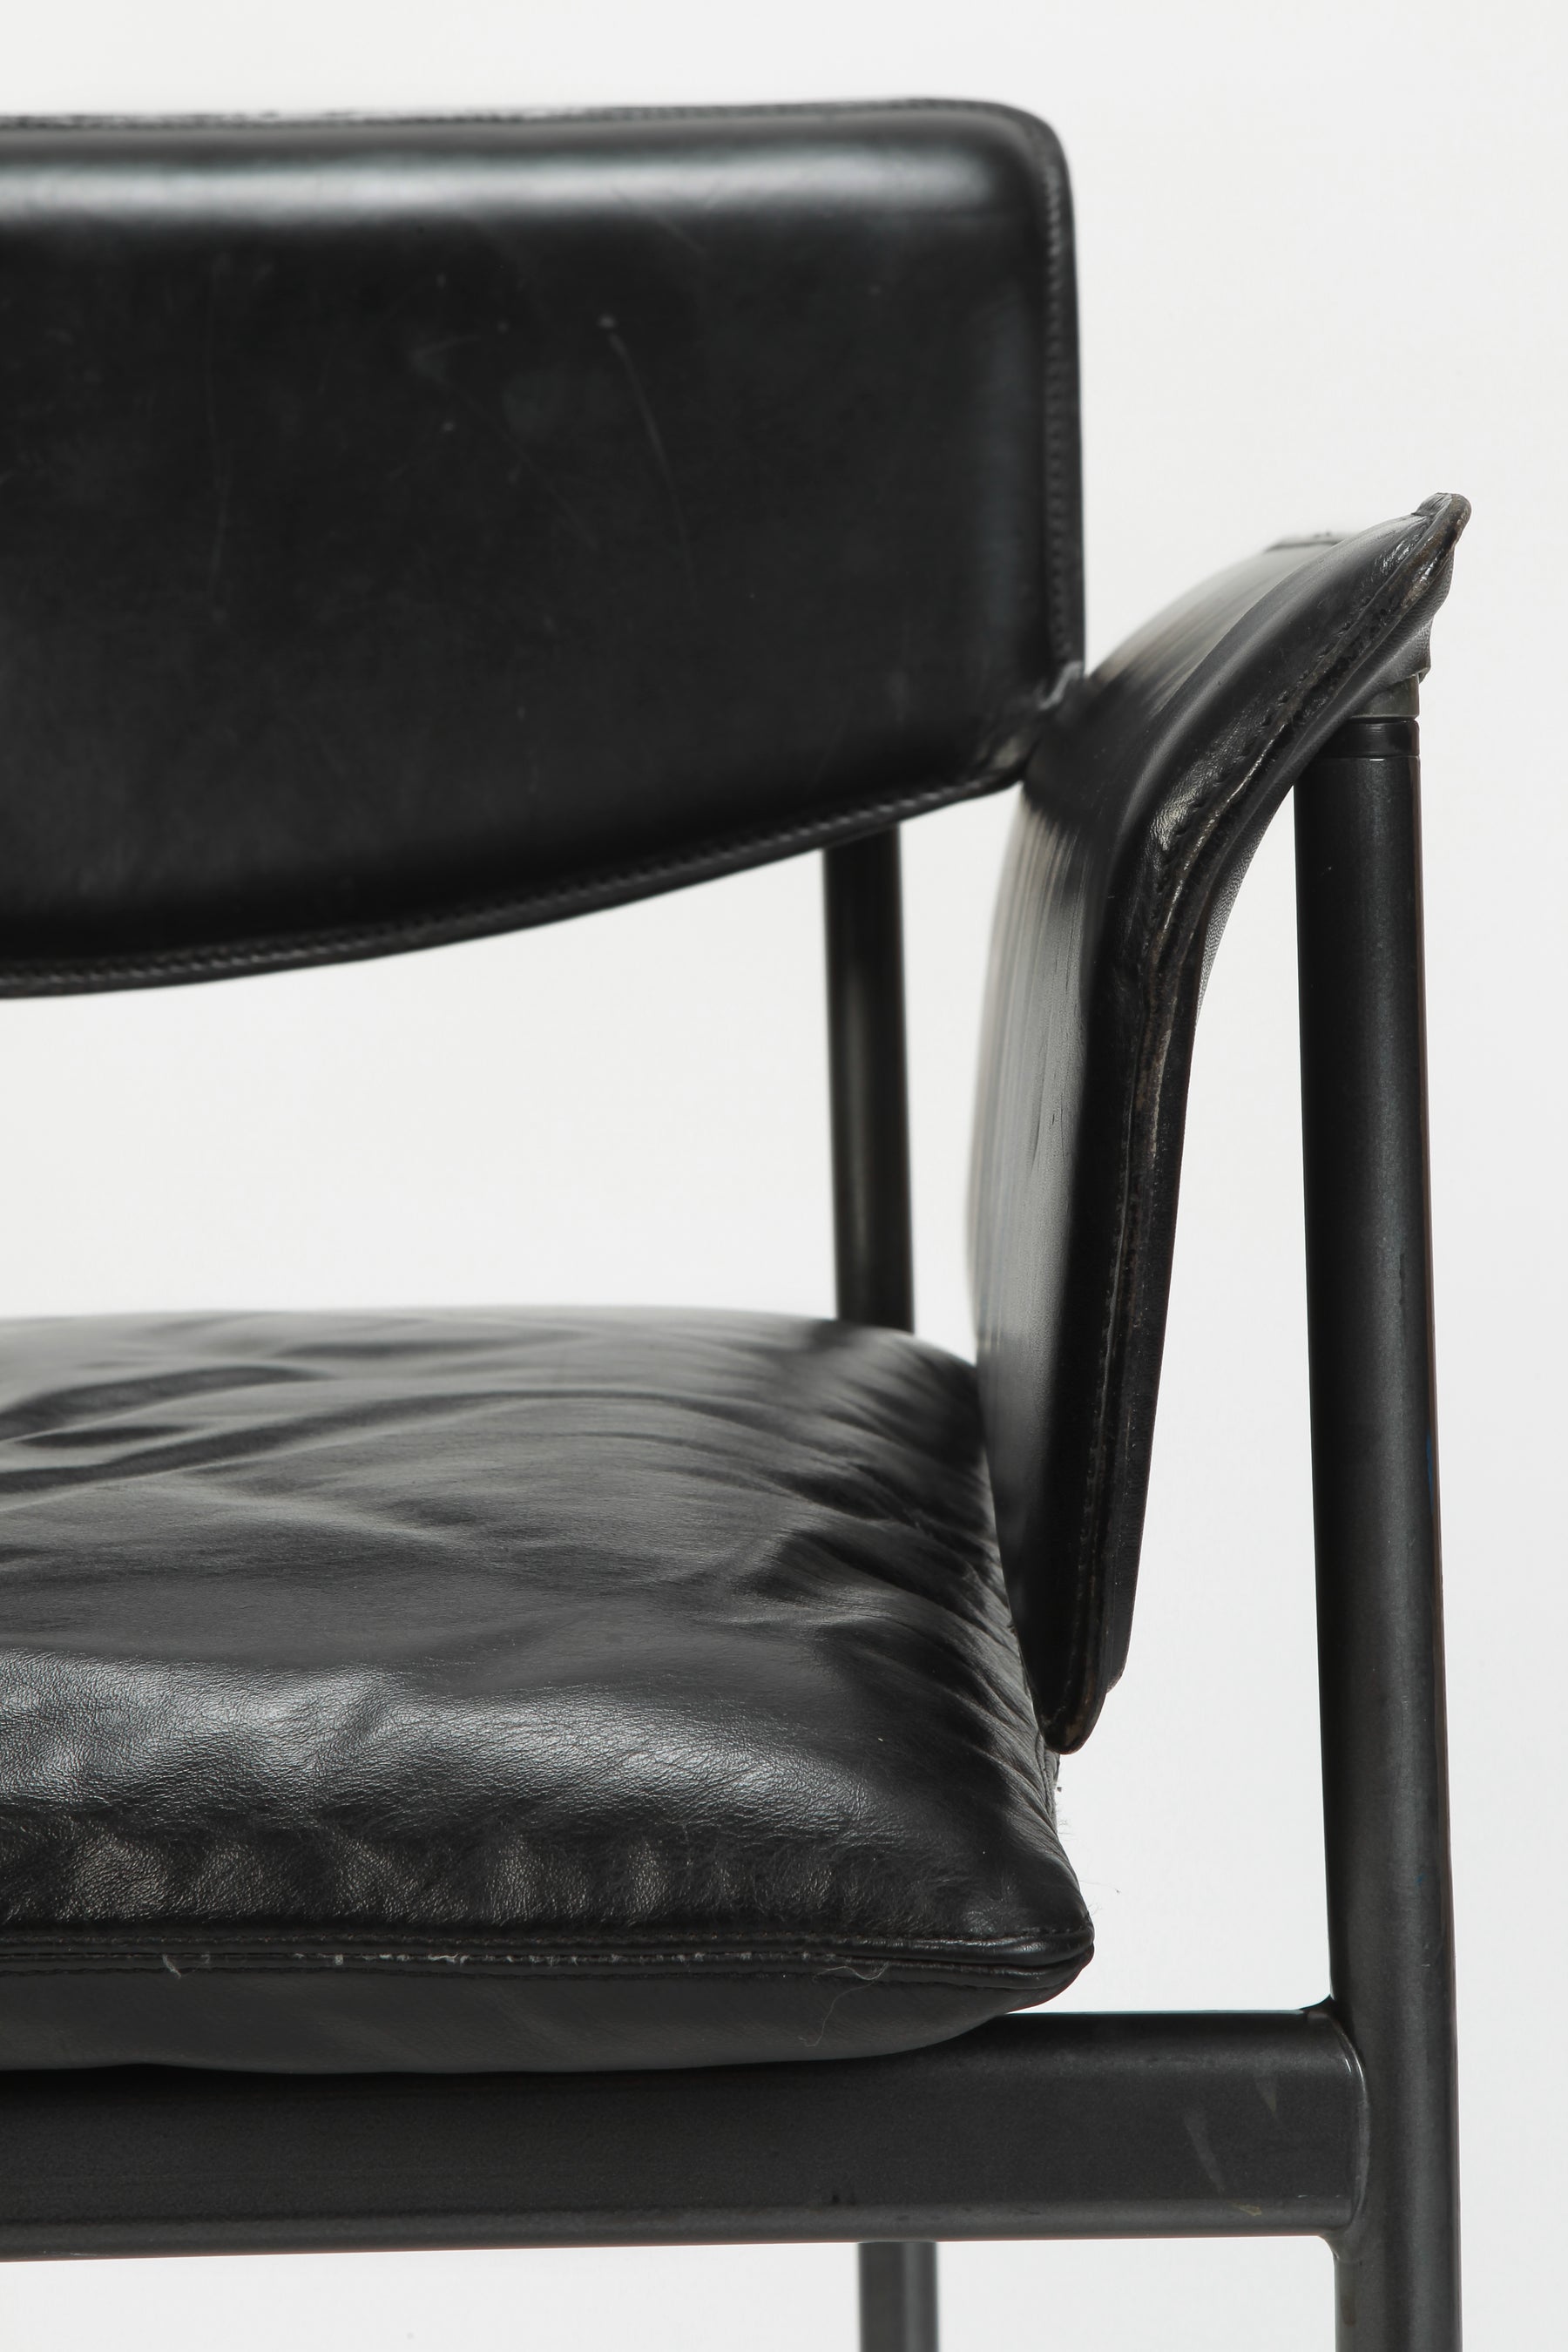 Vico Magistretti Prototype Chair, Poltrona Frau, 80s